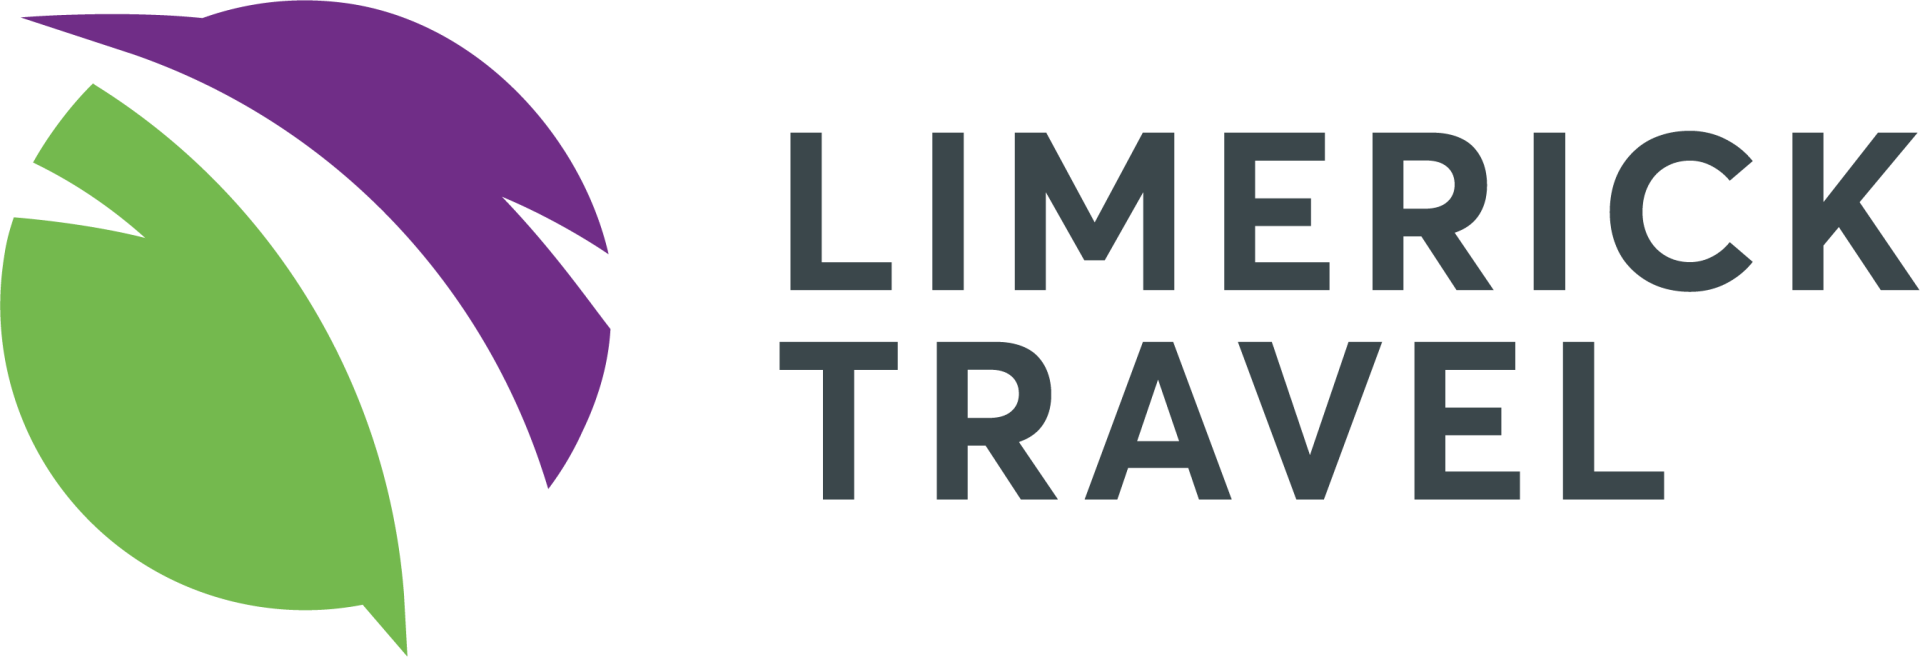 limerick travel golf